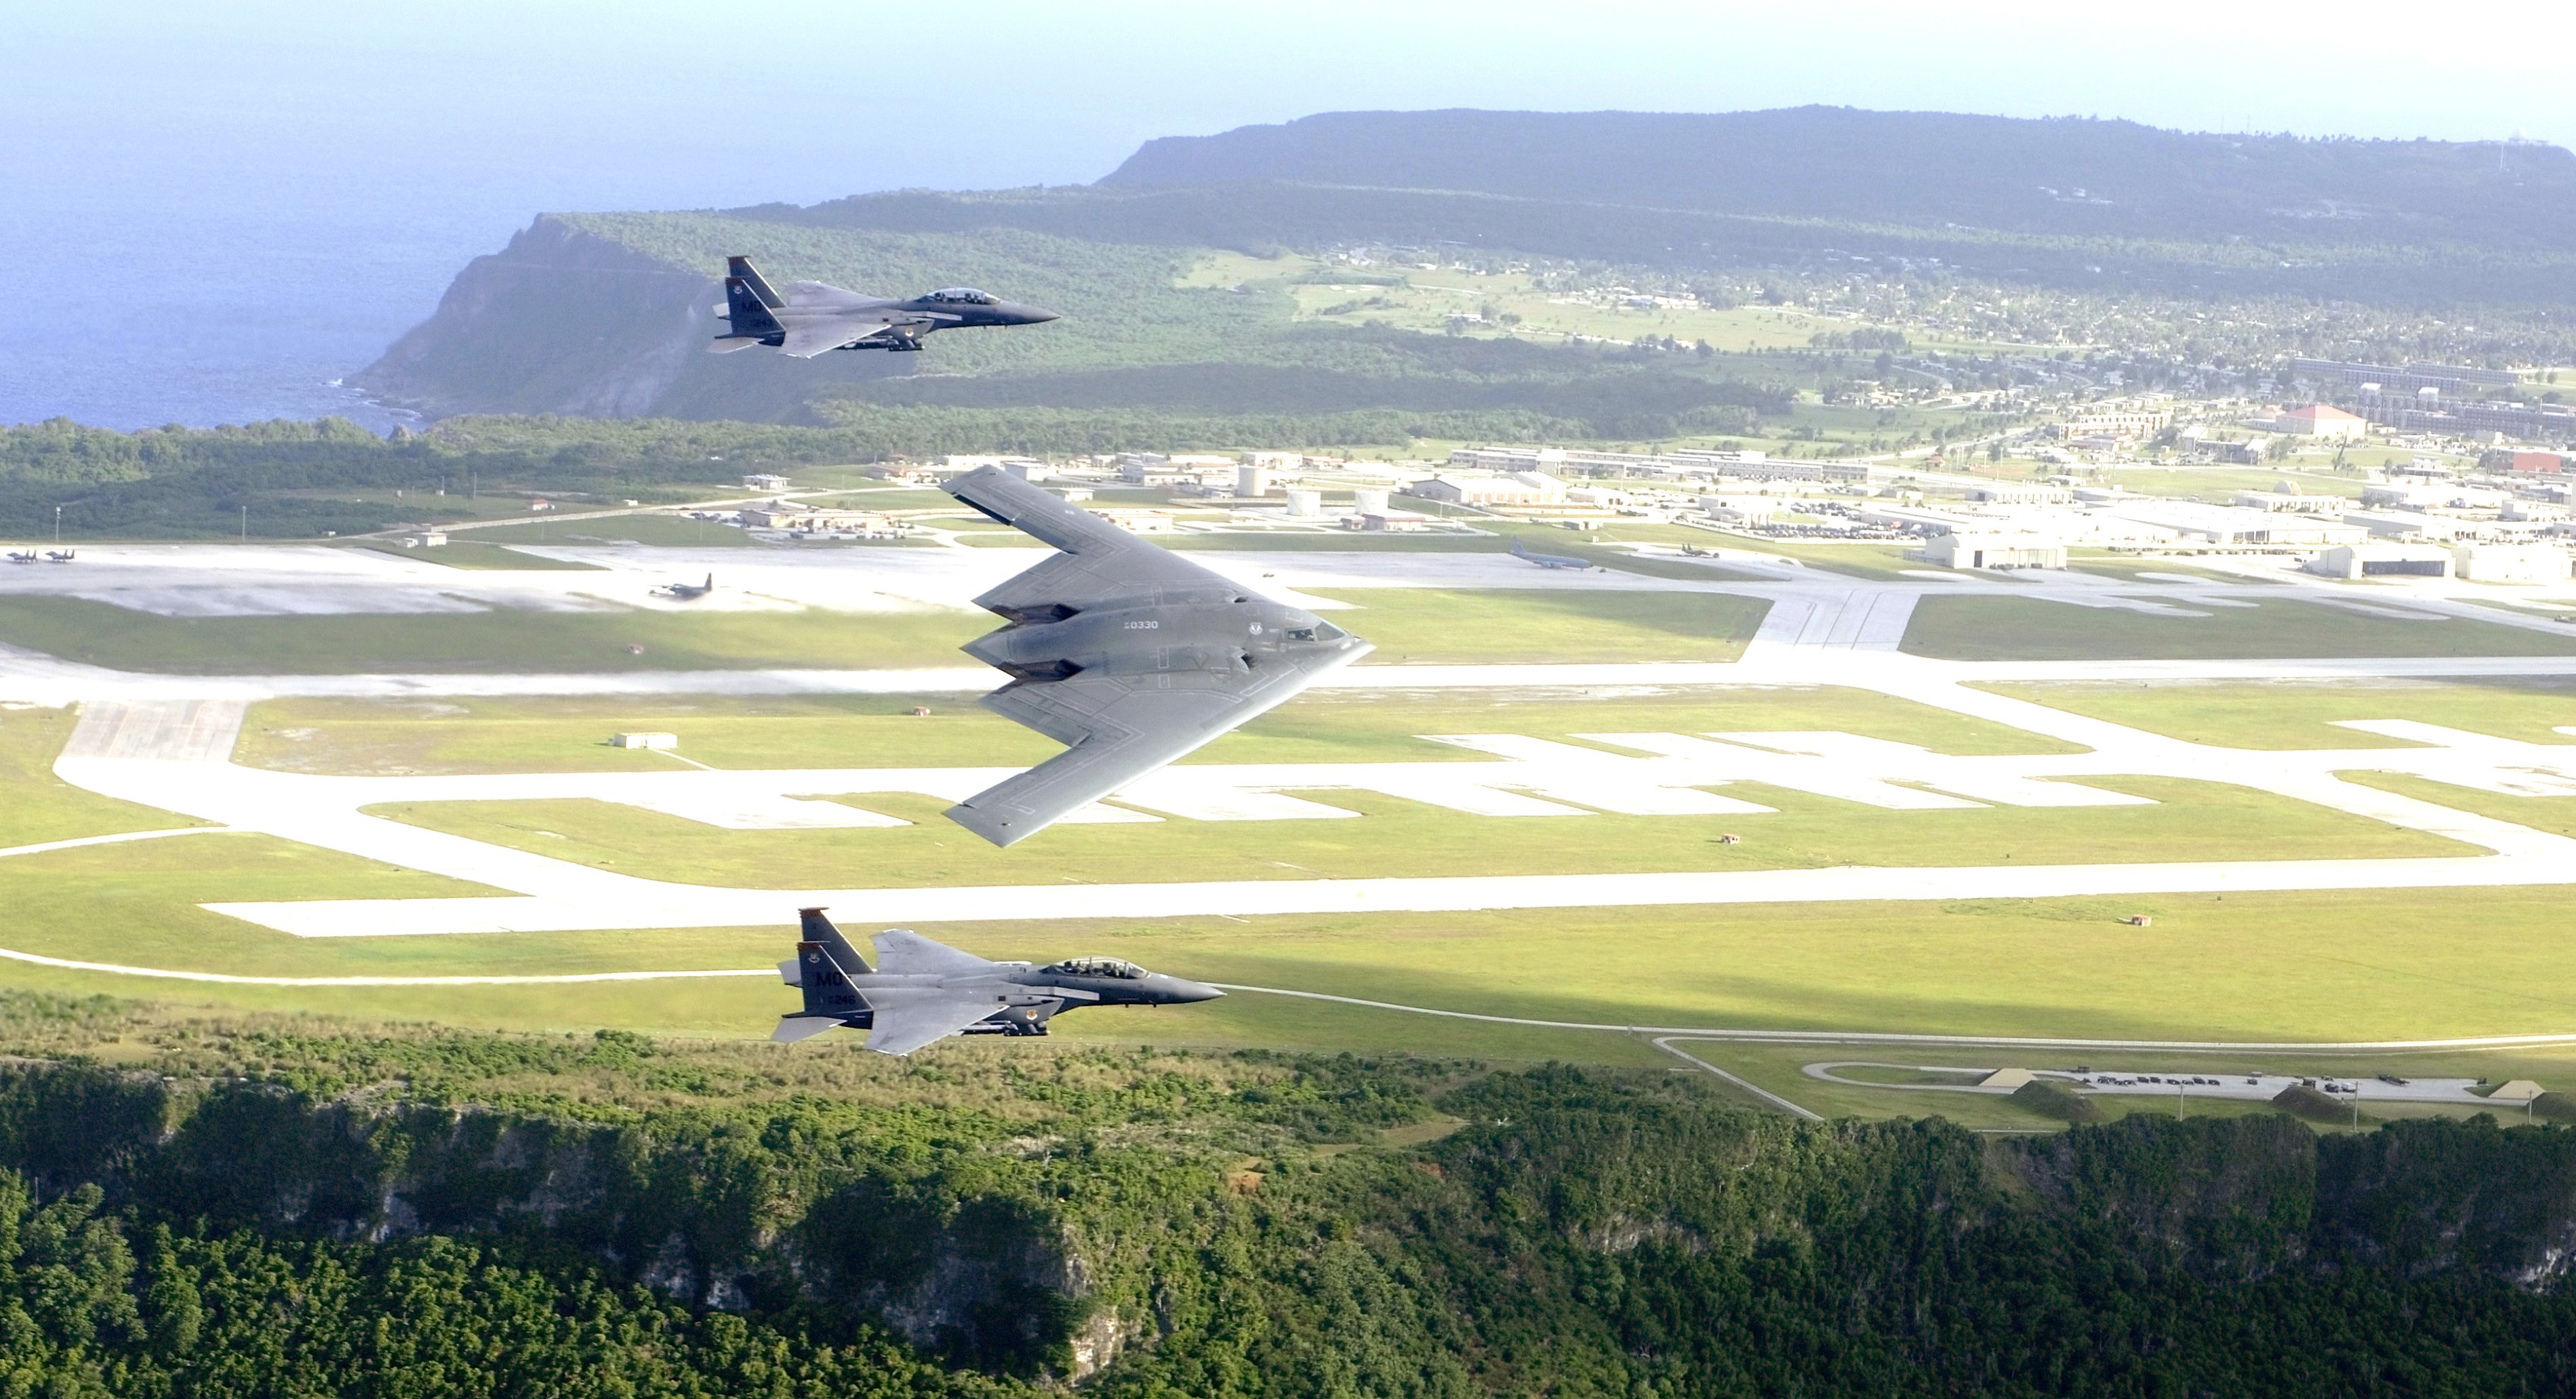 gpw-20051129-UnitedStatesAirForce-060707-F-3961R-001-B-2-Stealth-F-15E-Strike-Eagle-July-2005-Andersen-AFB-Guam-large.jpg